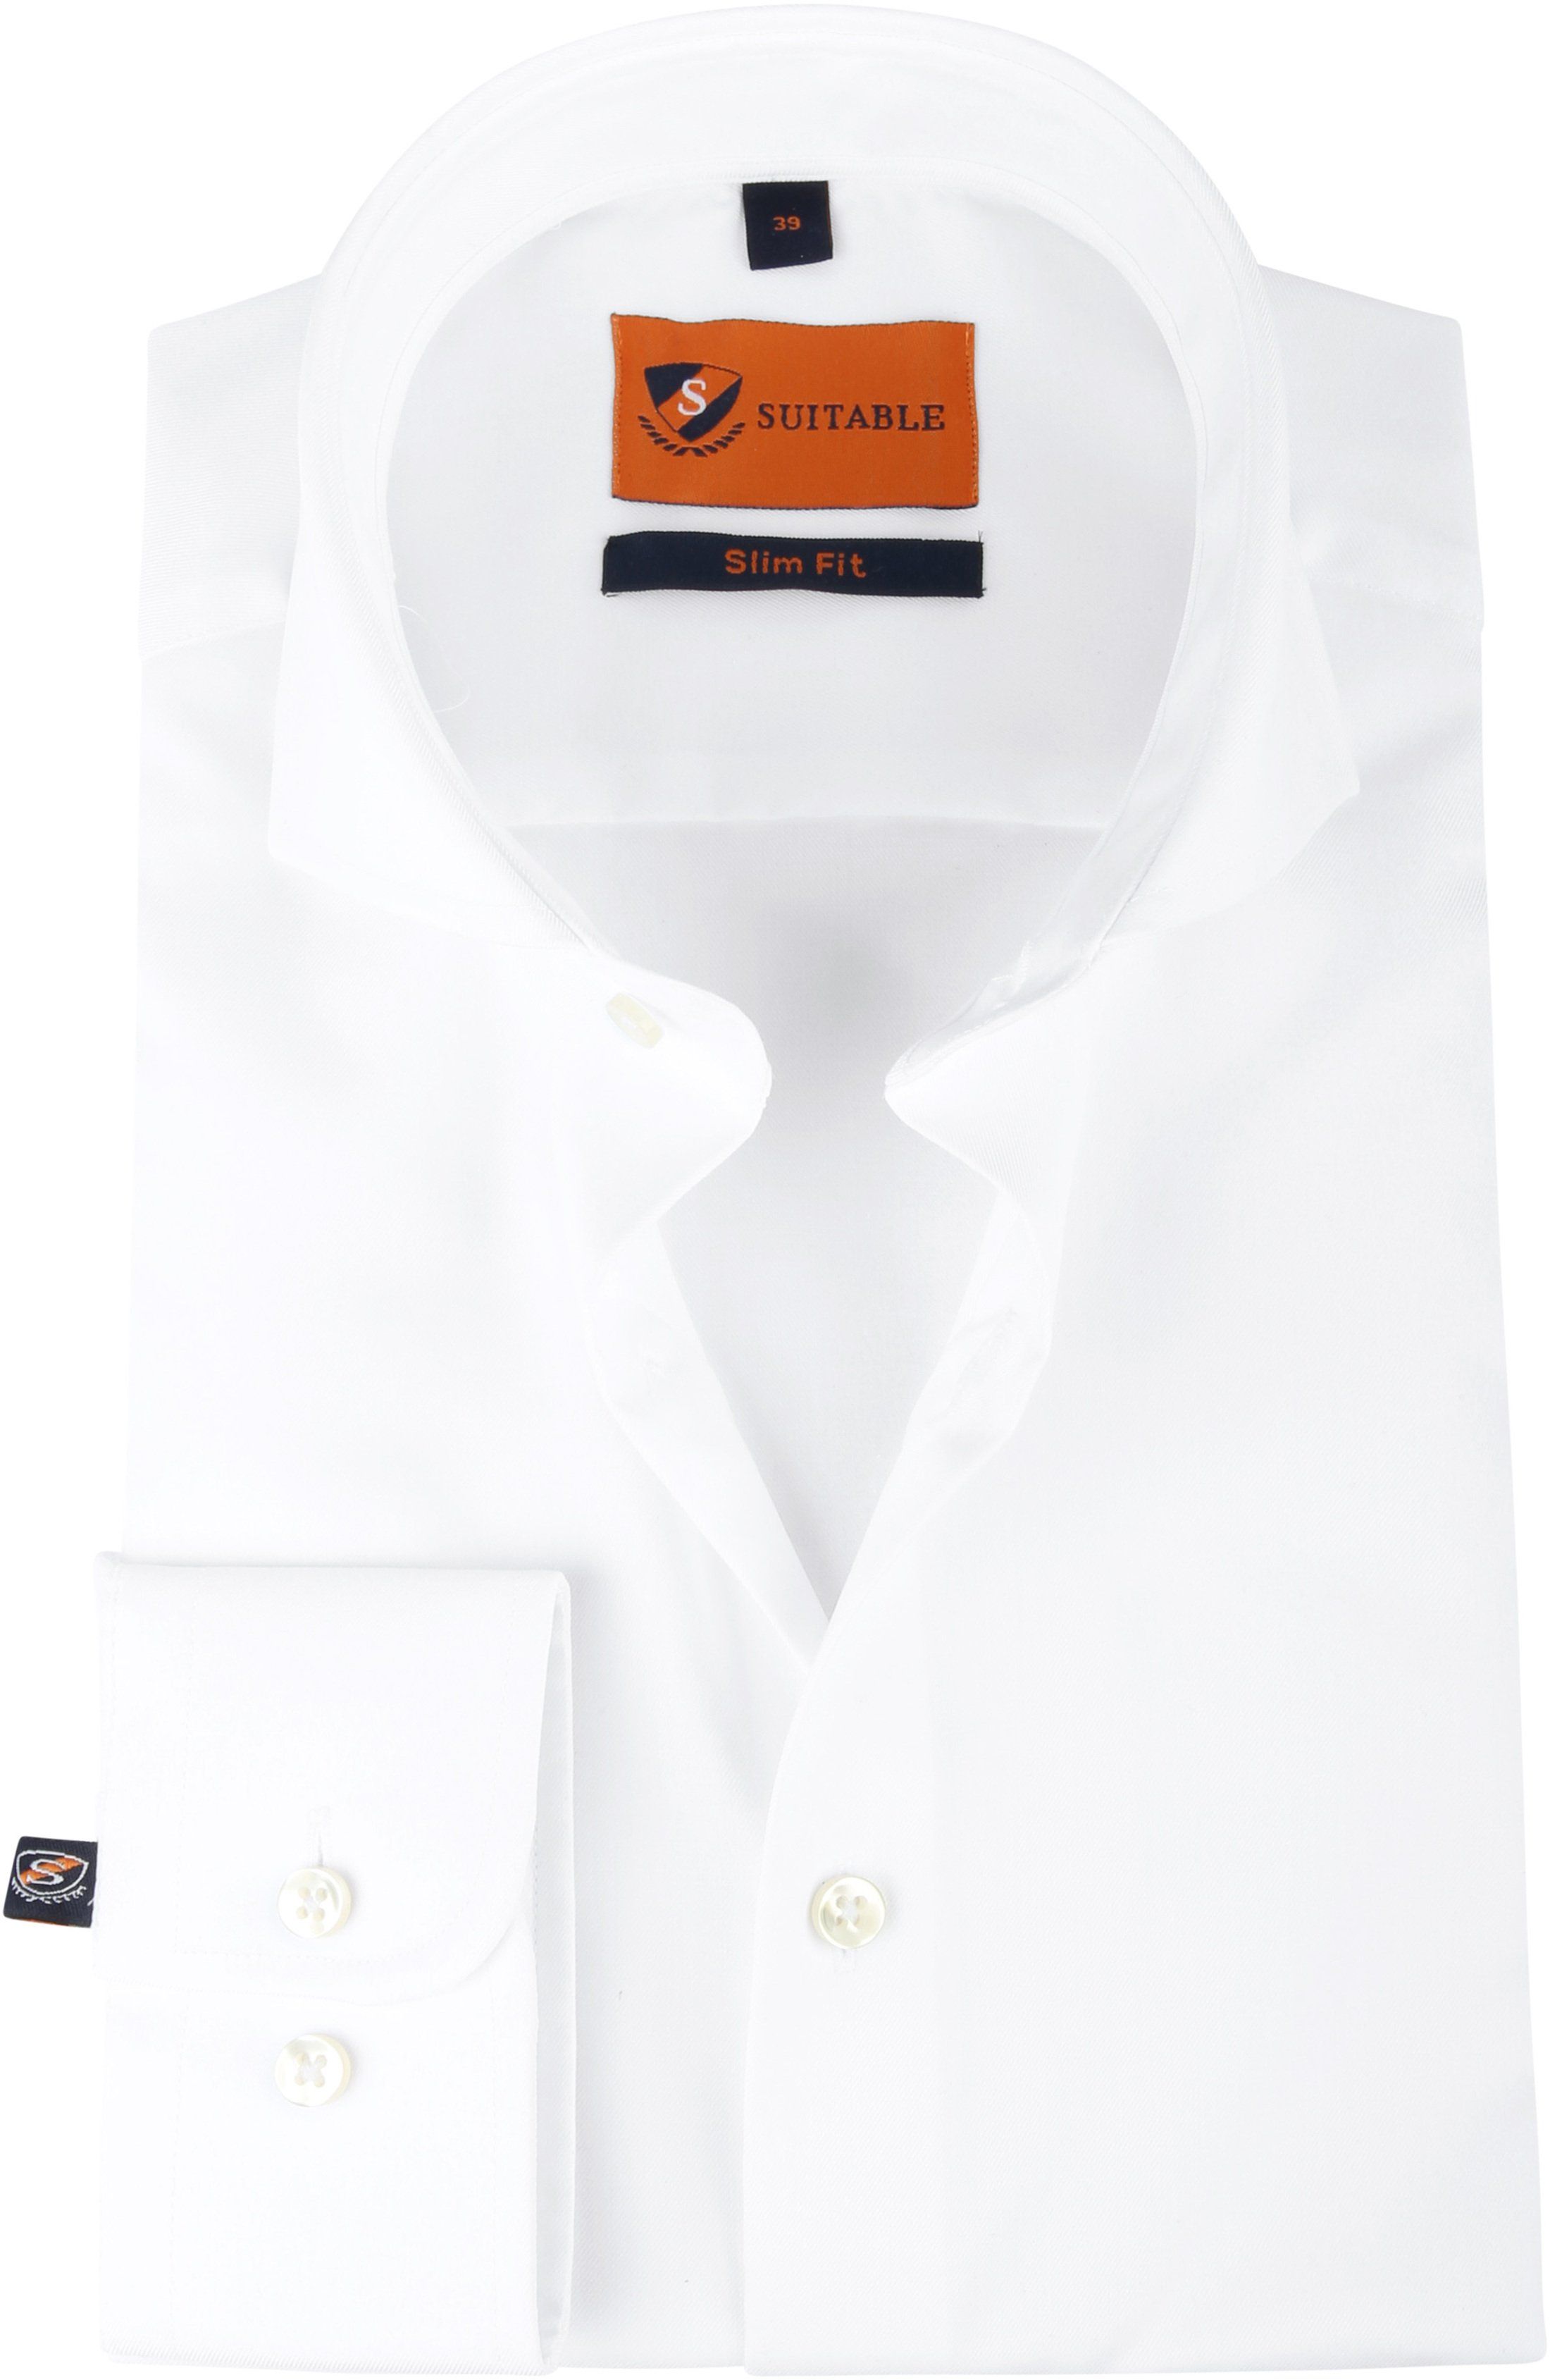 Suitable Shirt 146-7 White size 15